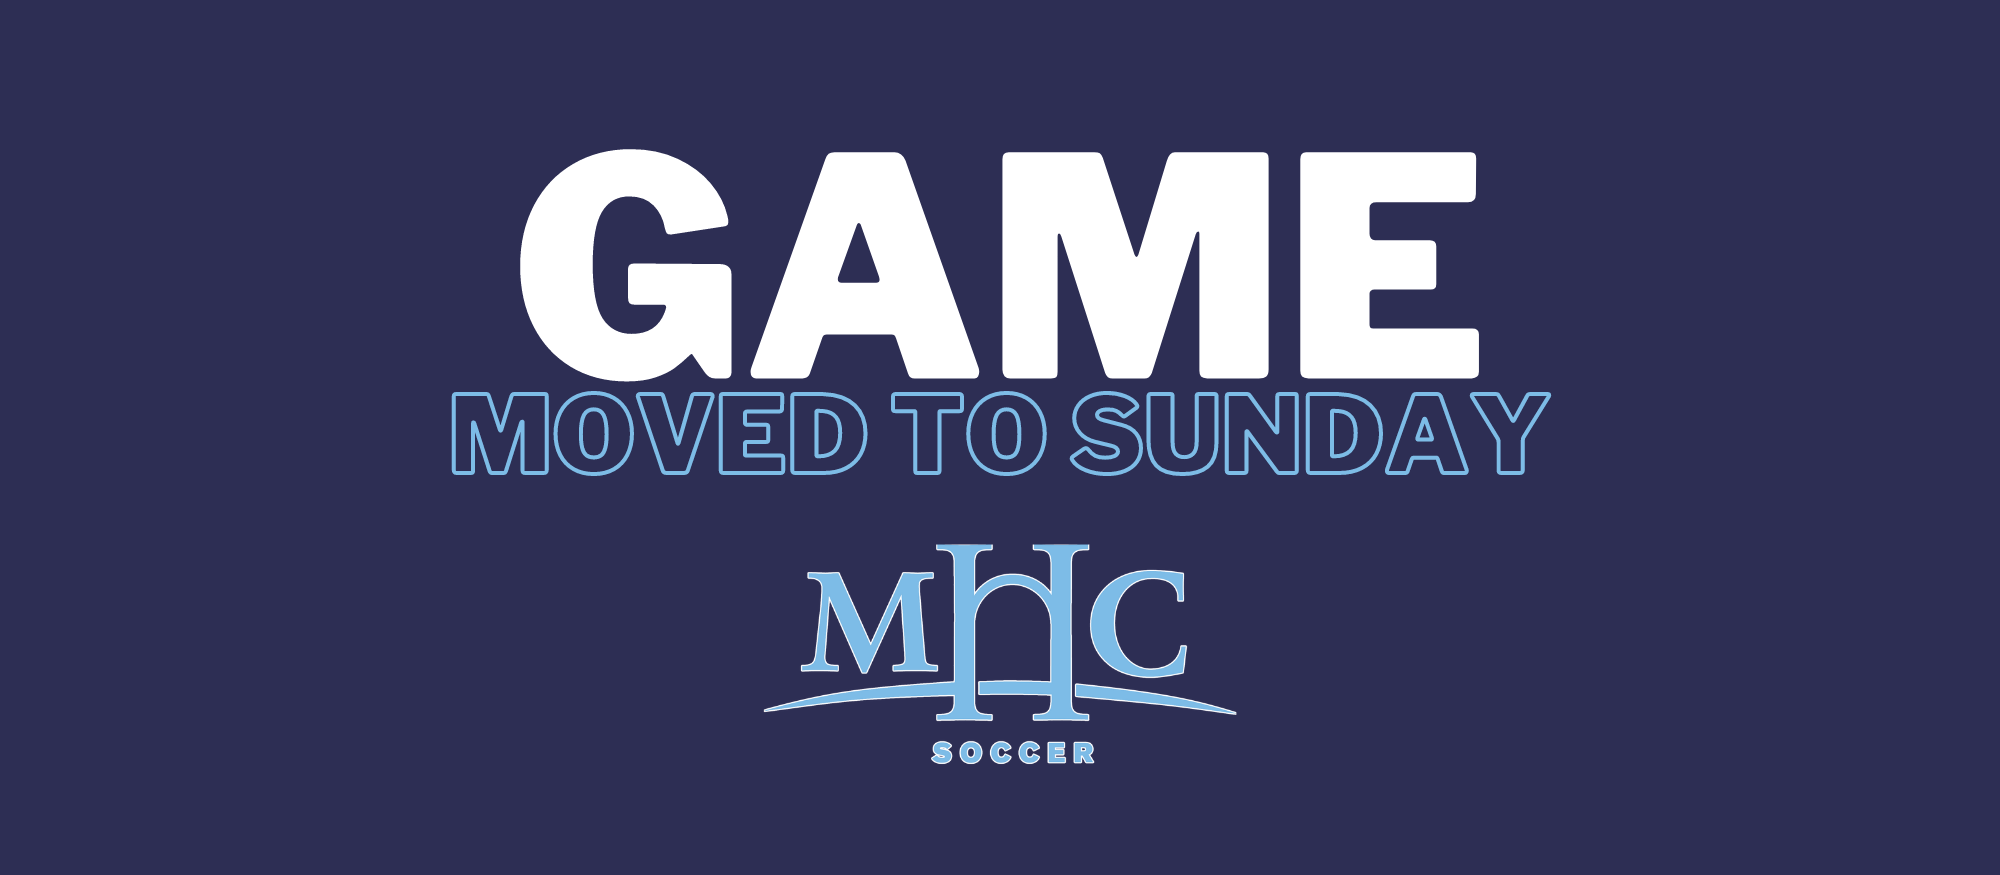 Soccer game at MIT postponed to Sunday